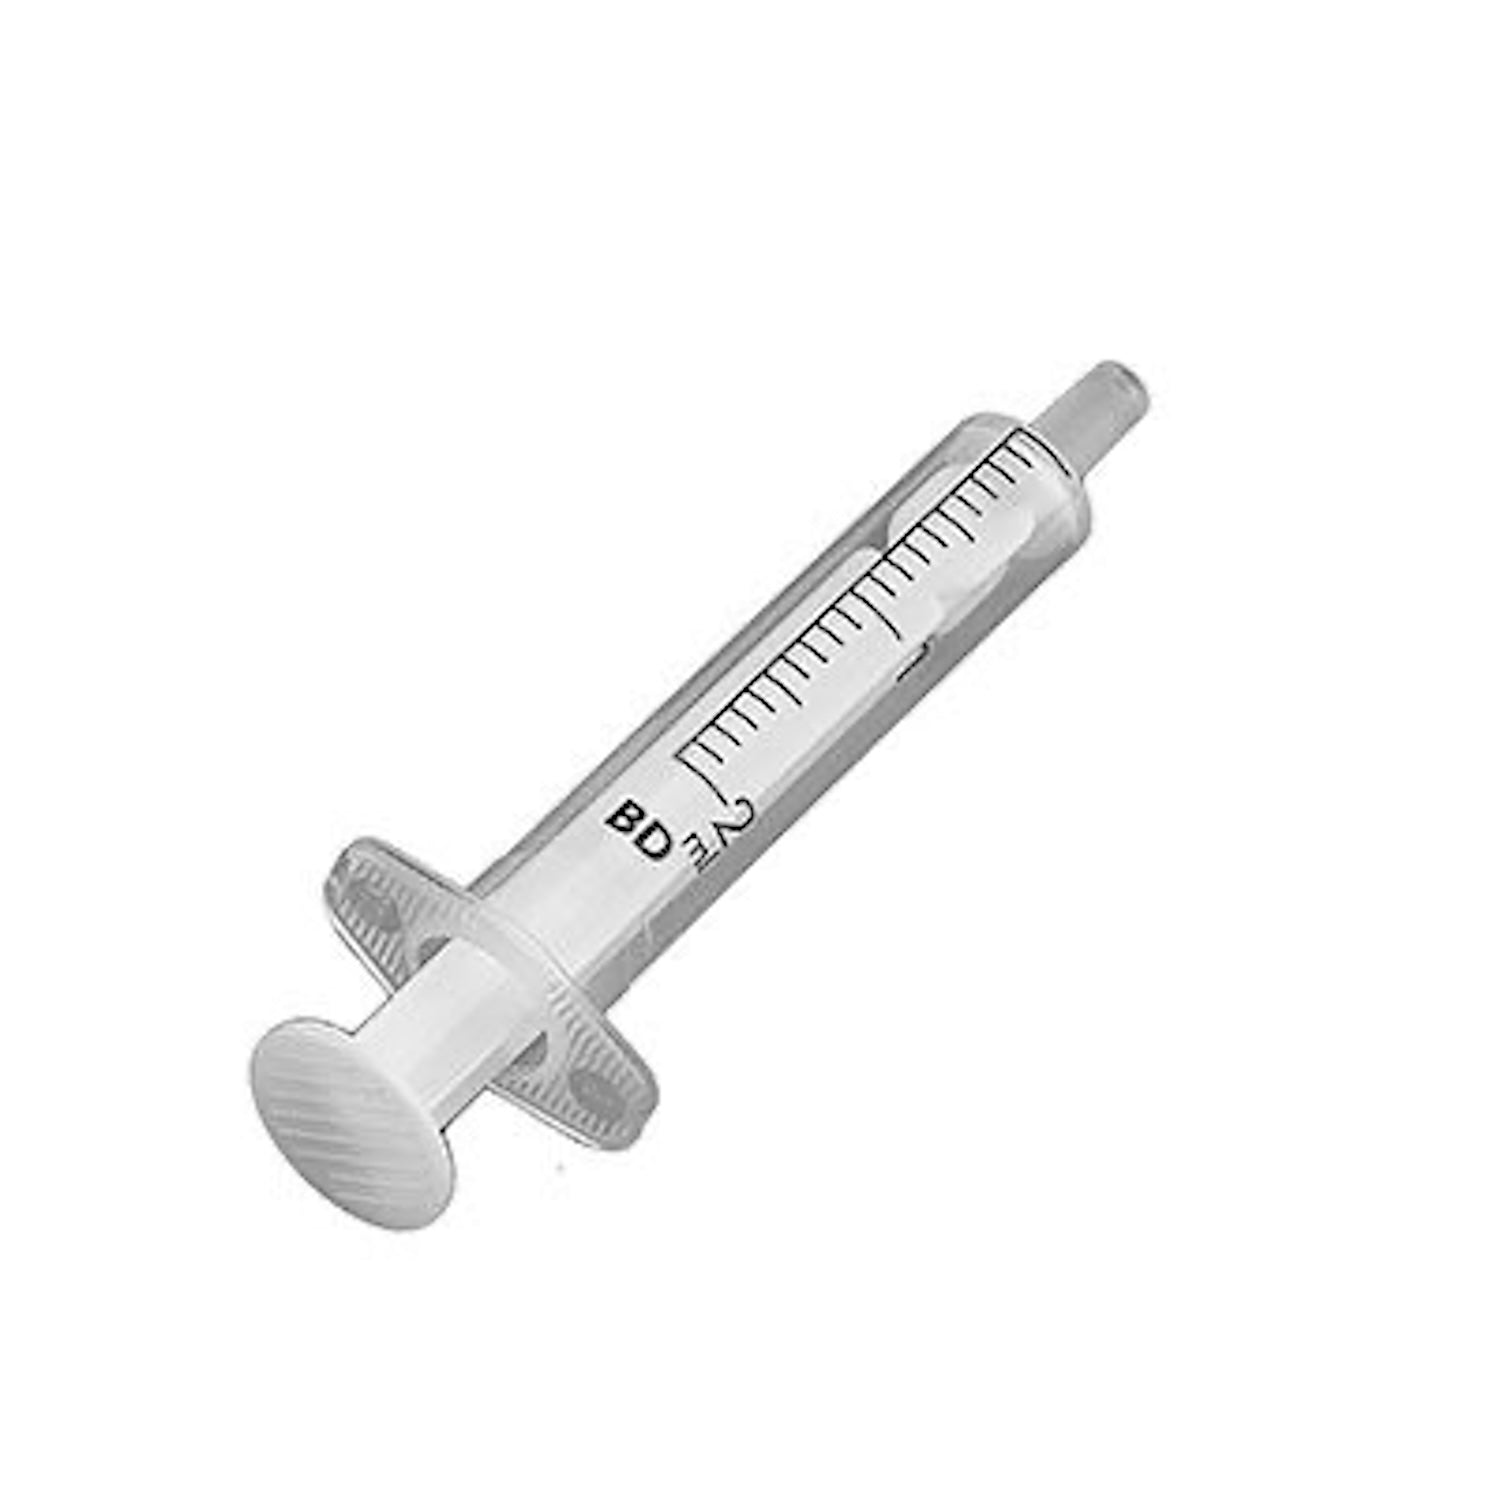 BD Discardit 2-Piece 10ml Luer Slip Syringe | Eccentric Tip | Scale 0.5ml | Pack of 100